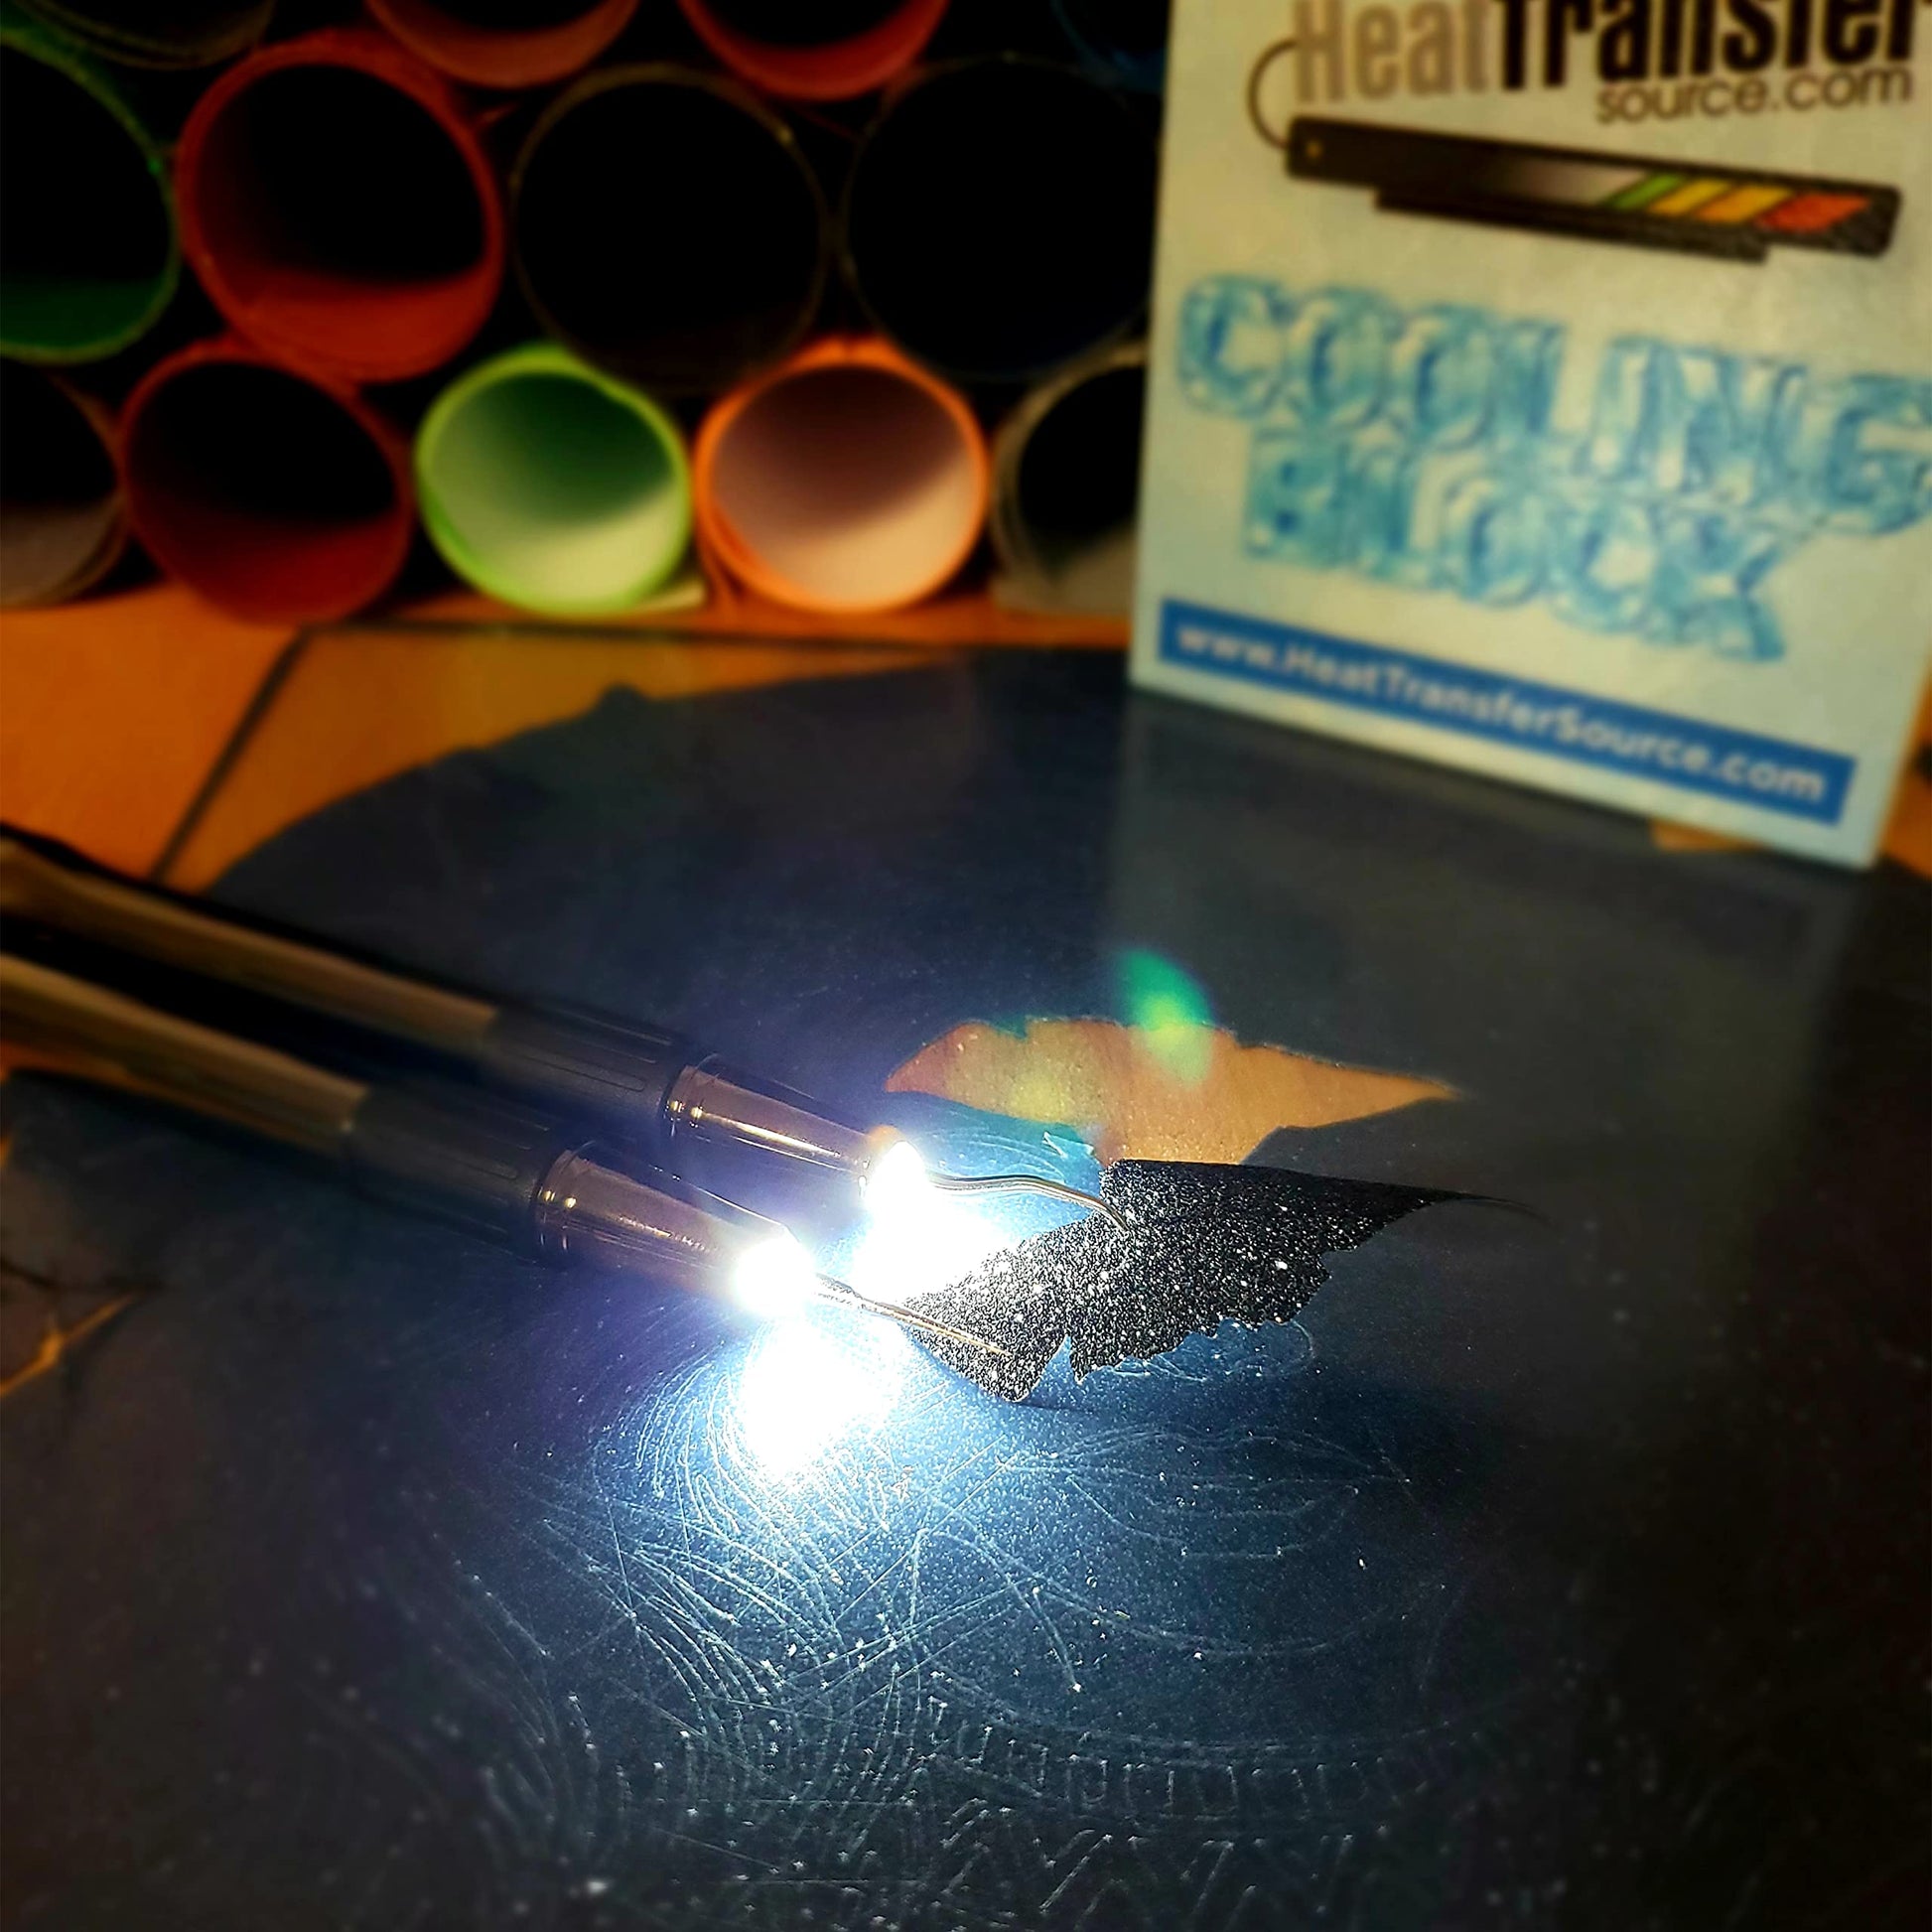  2pcs Weeding Pen for Vinyl, Craft Weeding Tool with